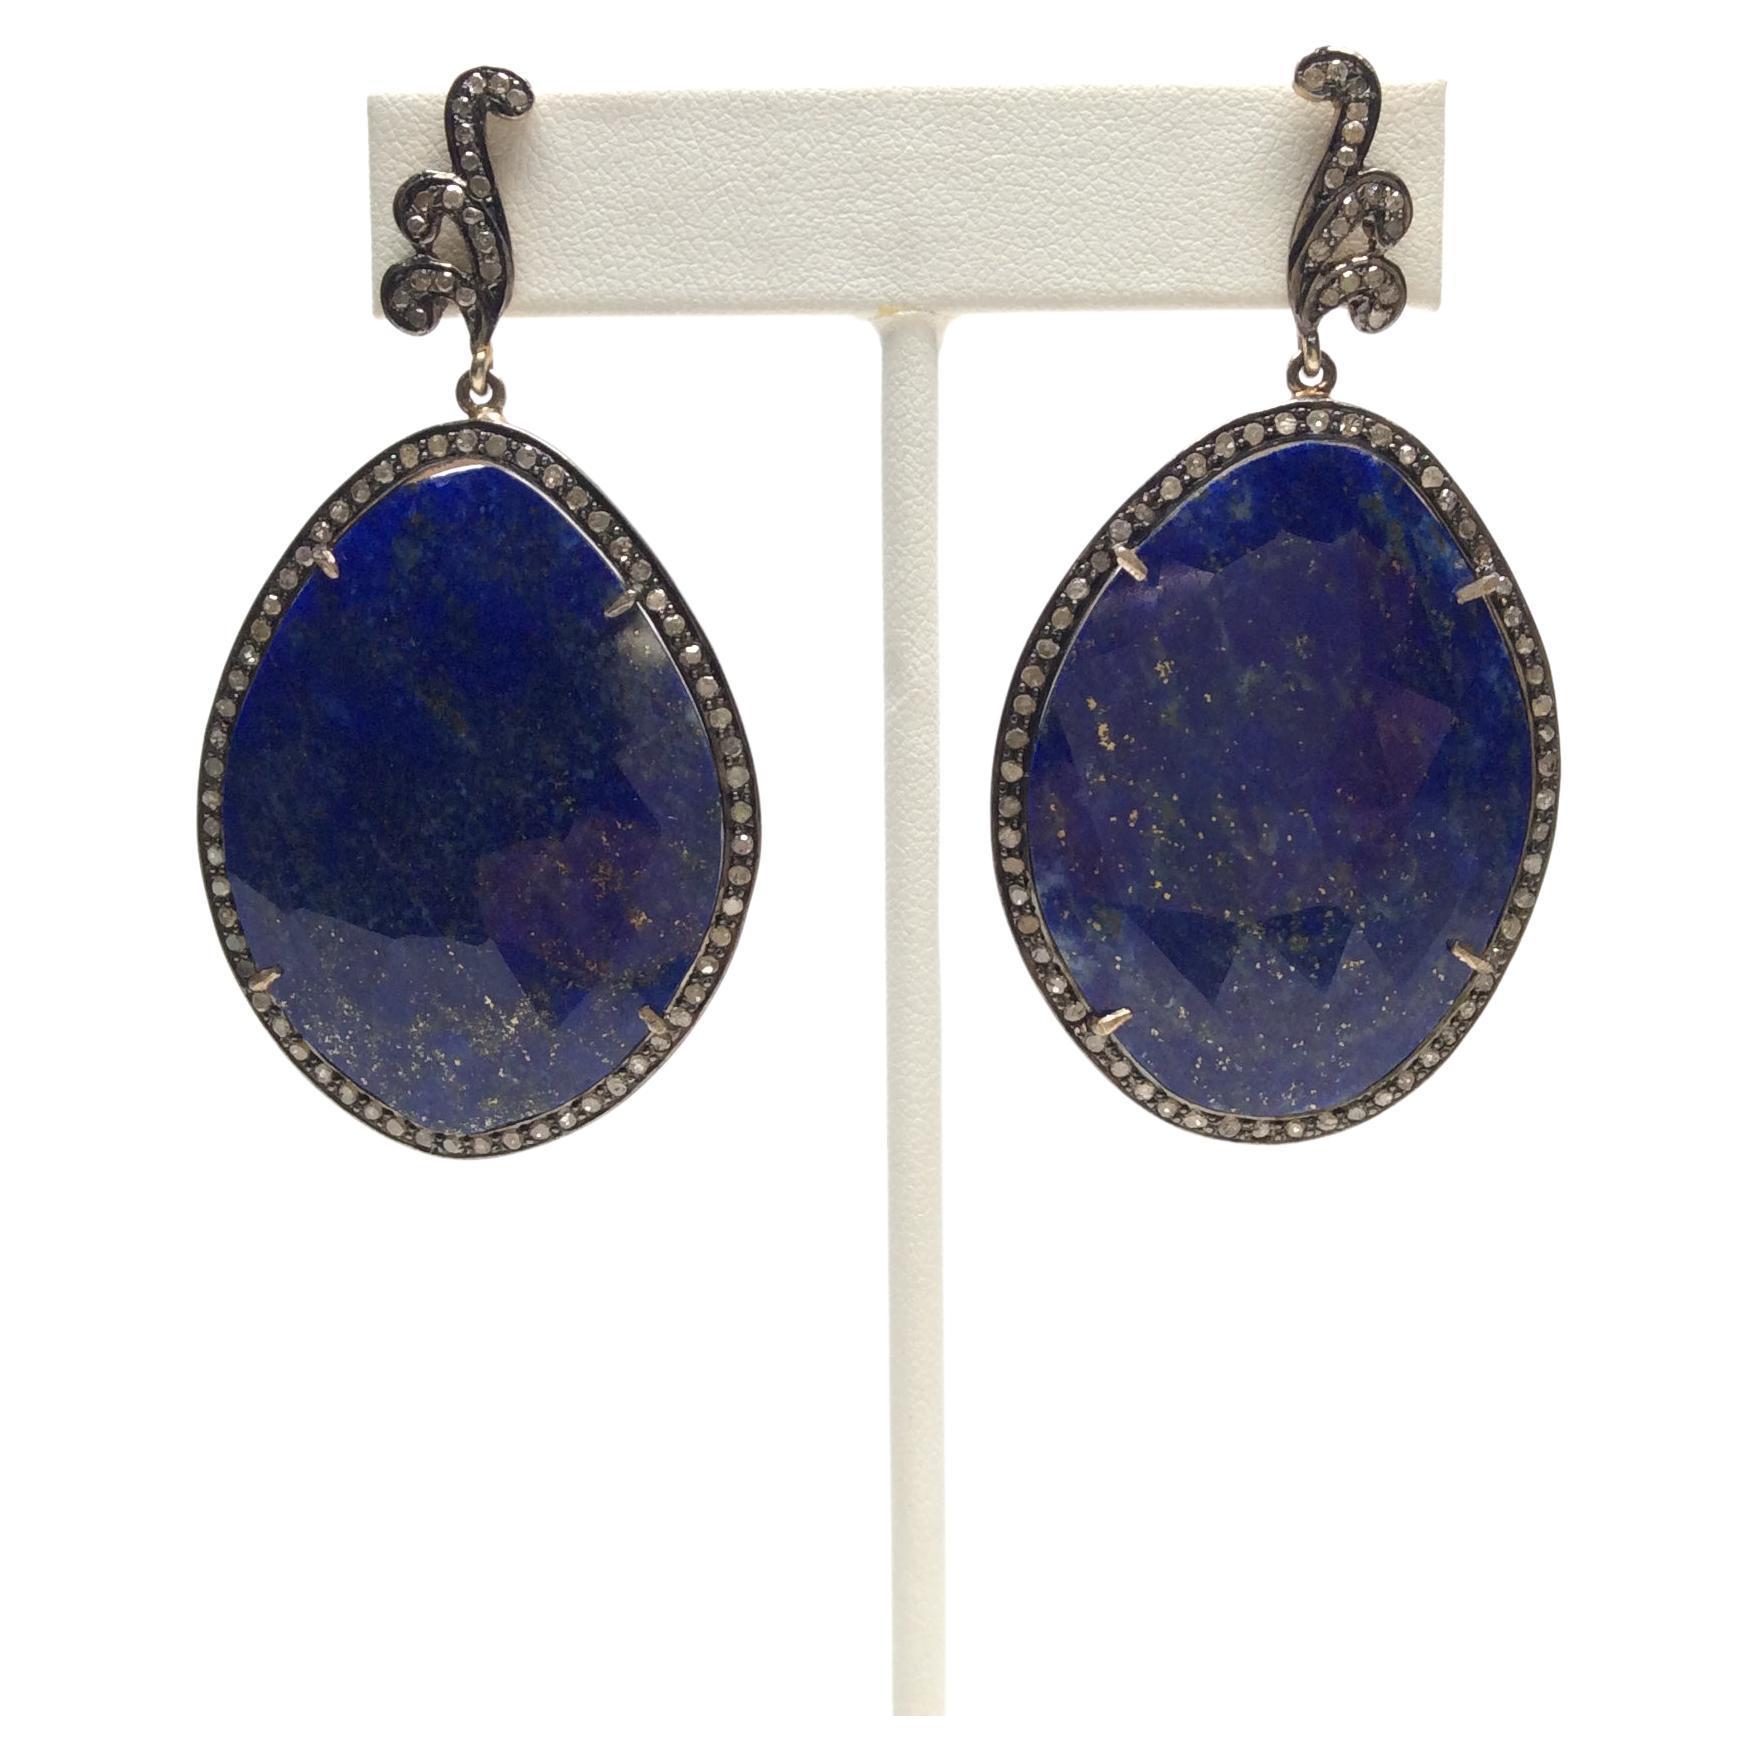 Lapis Lazuli stones

Champagne diamonds

Dimensions: 2 5/8″ L, 1.5″W